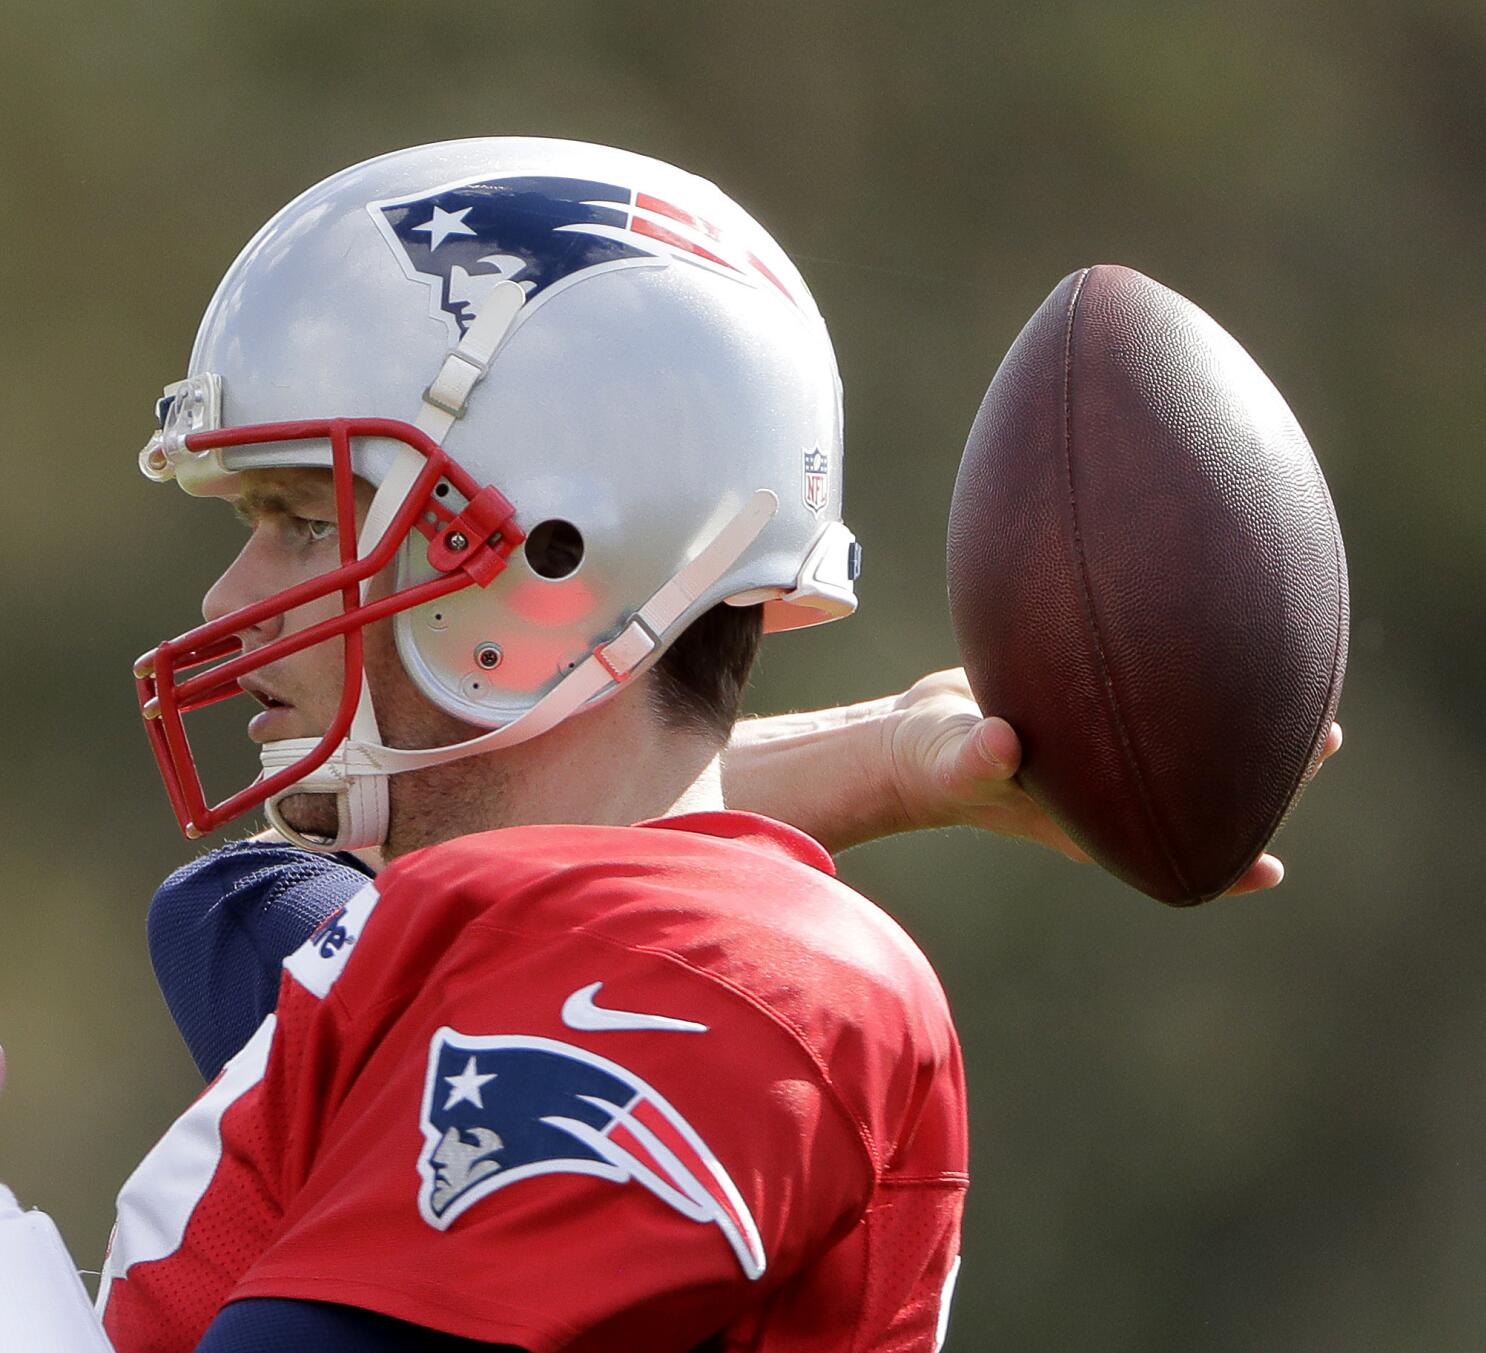 NFL, Nielsen survey finds two-thirds of U.S. saw Super Bowl